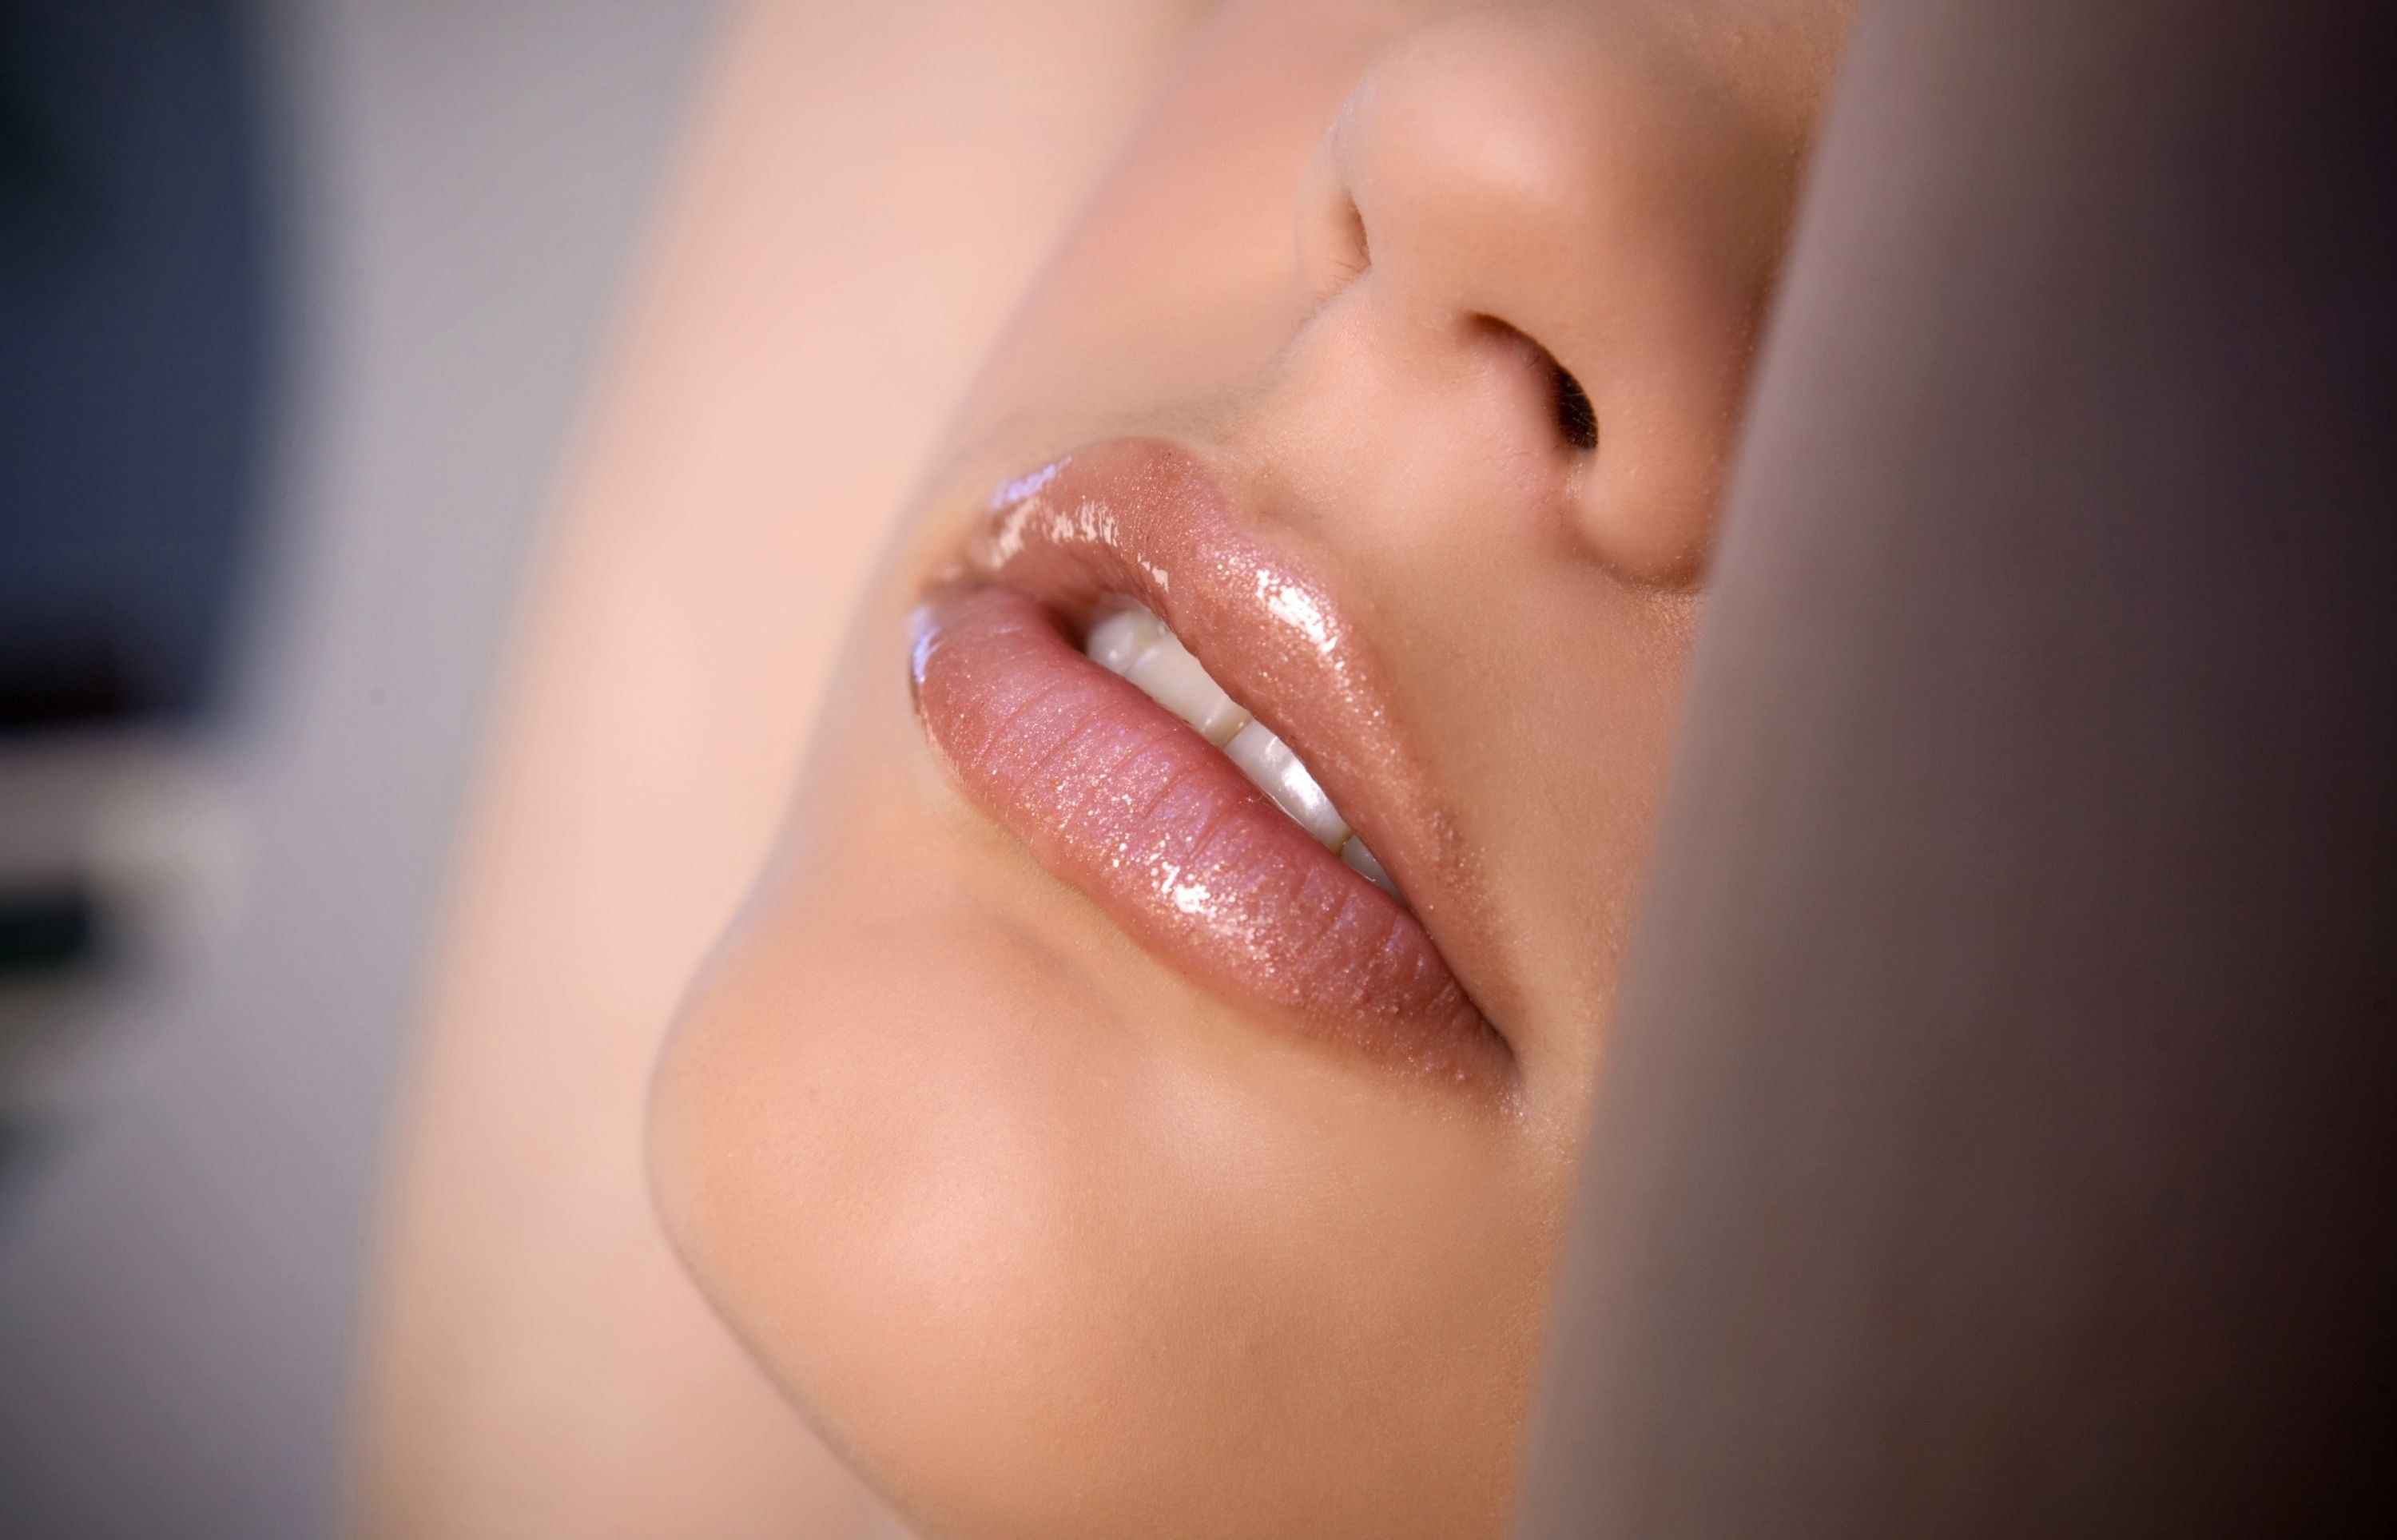 Up close 3. Женские губы. Красивые губы. Губки женские. Красивые губки девушек.